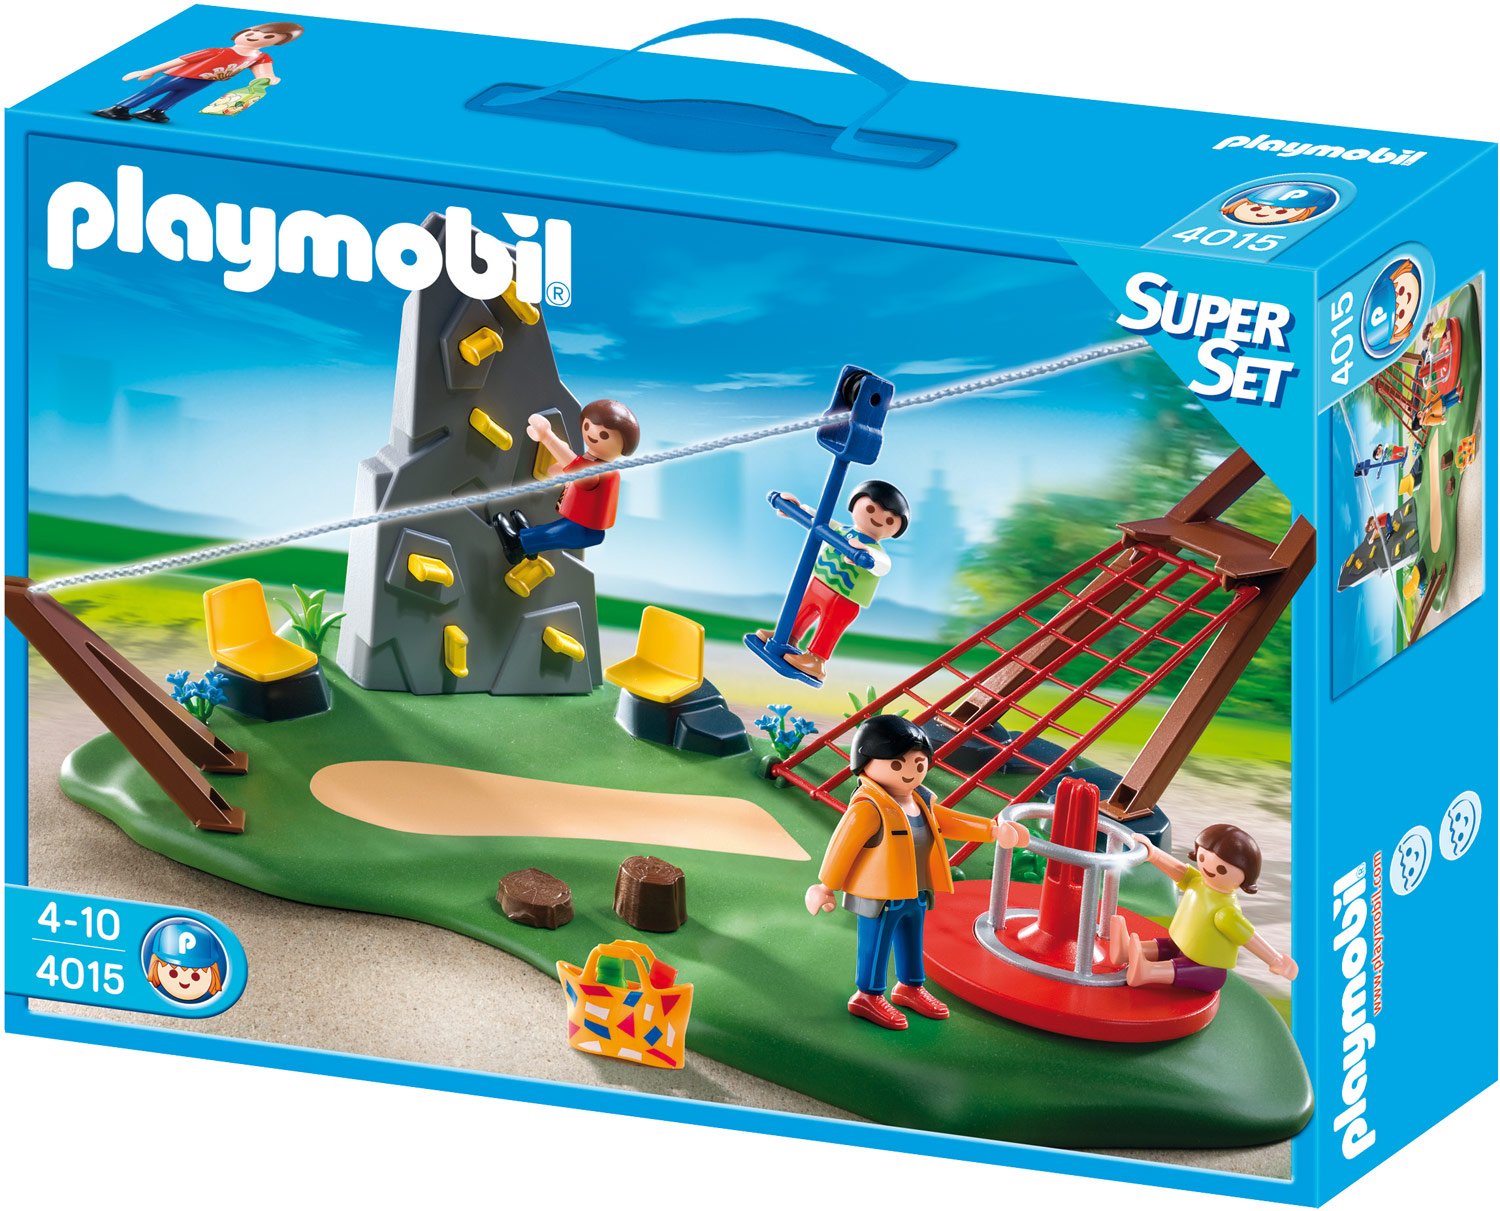 Playmobil Superset Playground